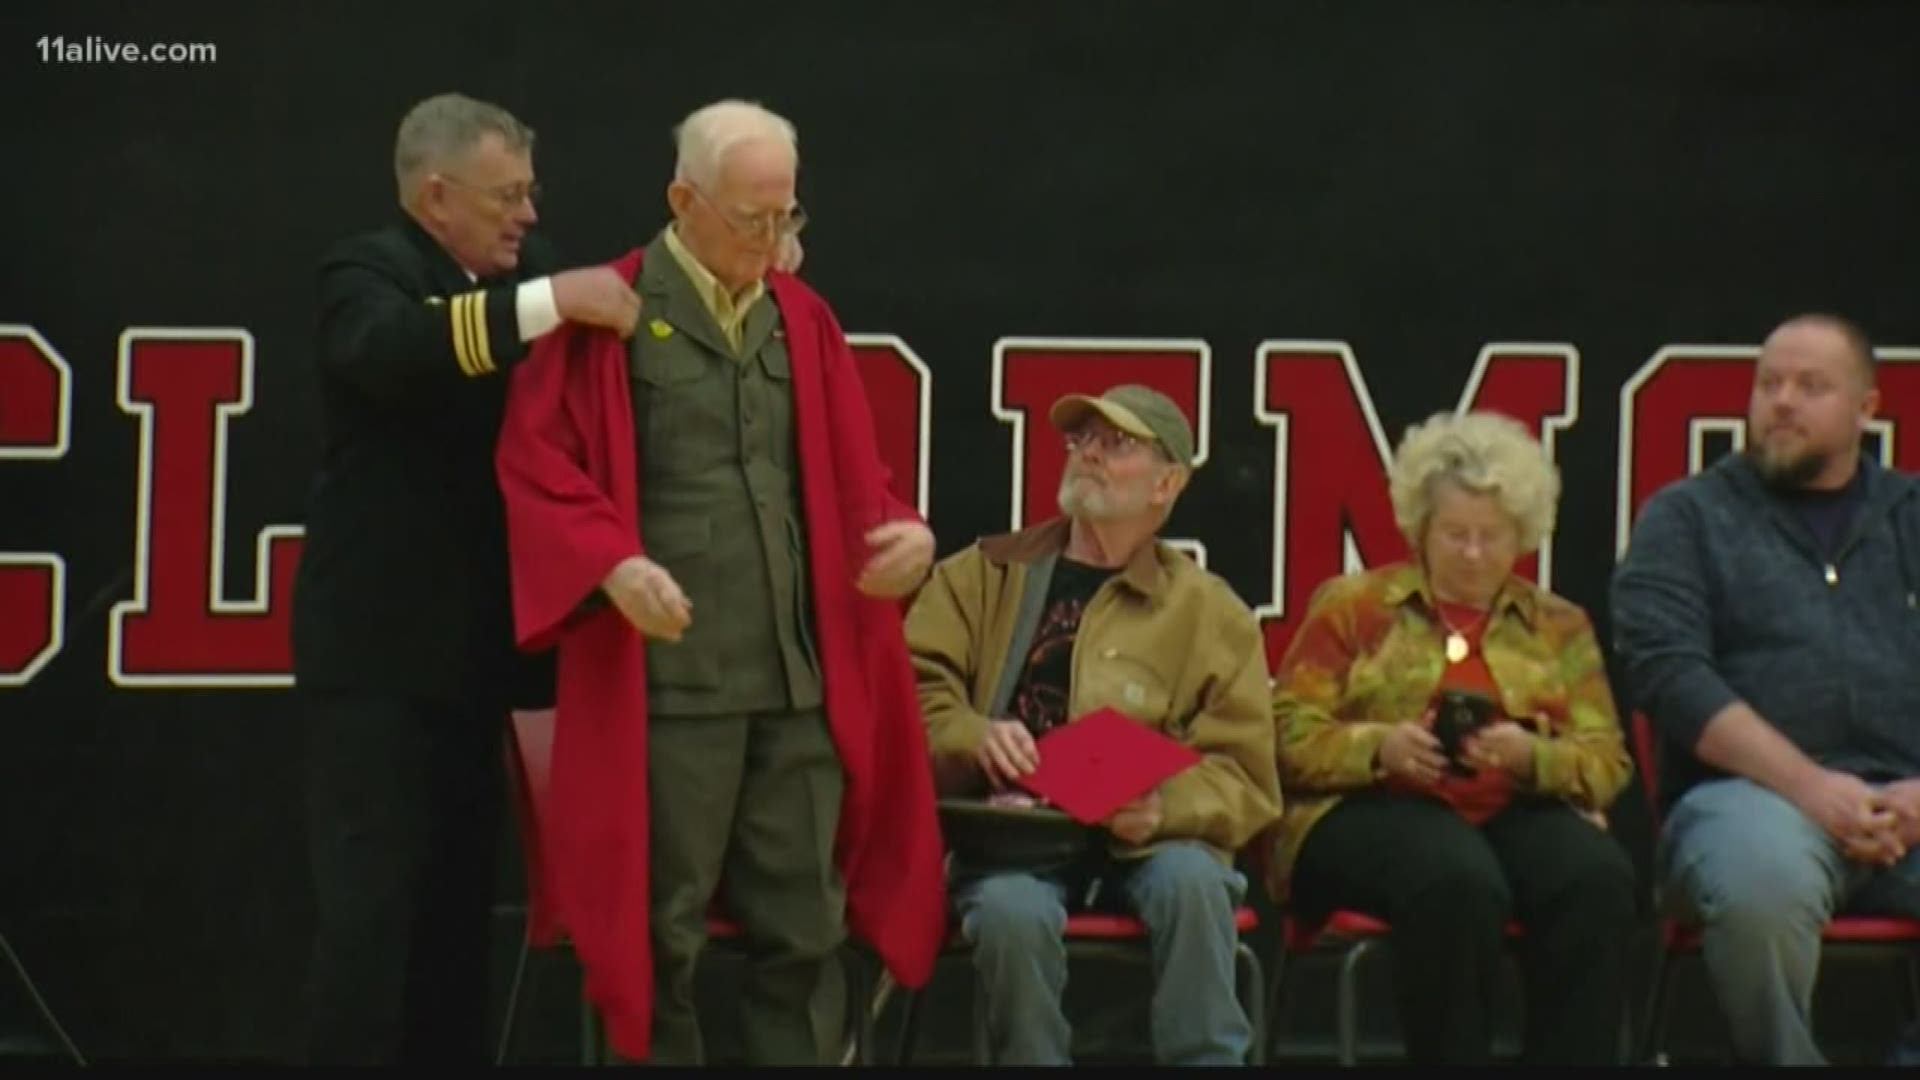 Dressed in his original Marine uniform, 95-year-old Veteran Lewie Shaw finally received his high school diploma.